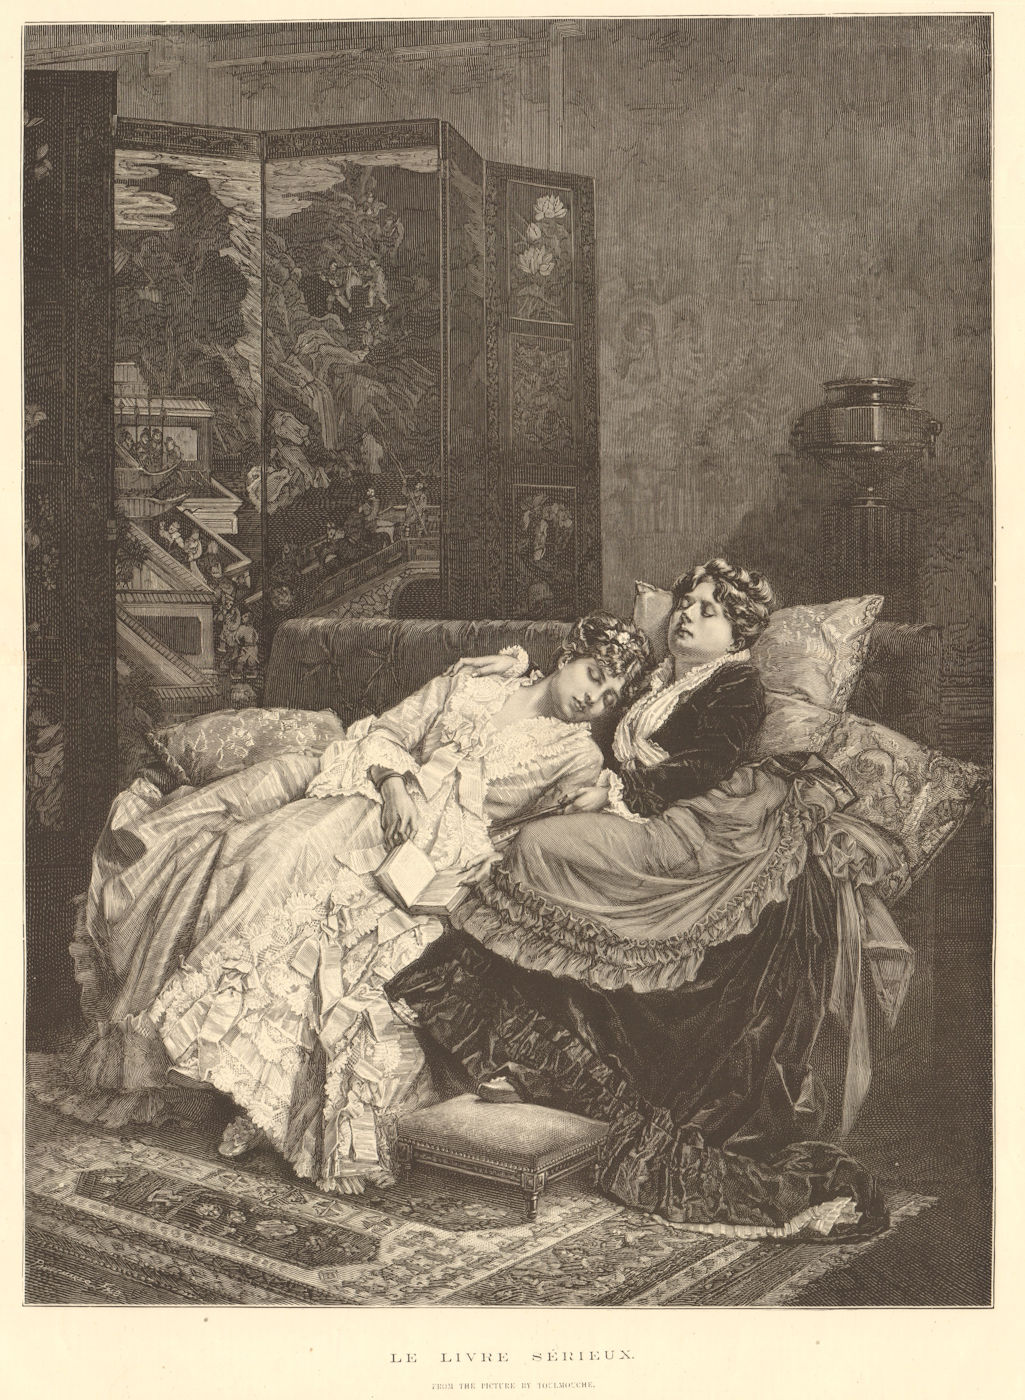 Le livre serieux, by Toulmouche. Asleep reading book 1874 old antique print